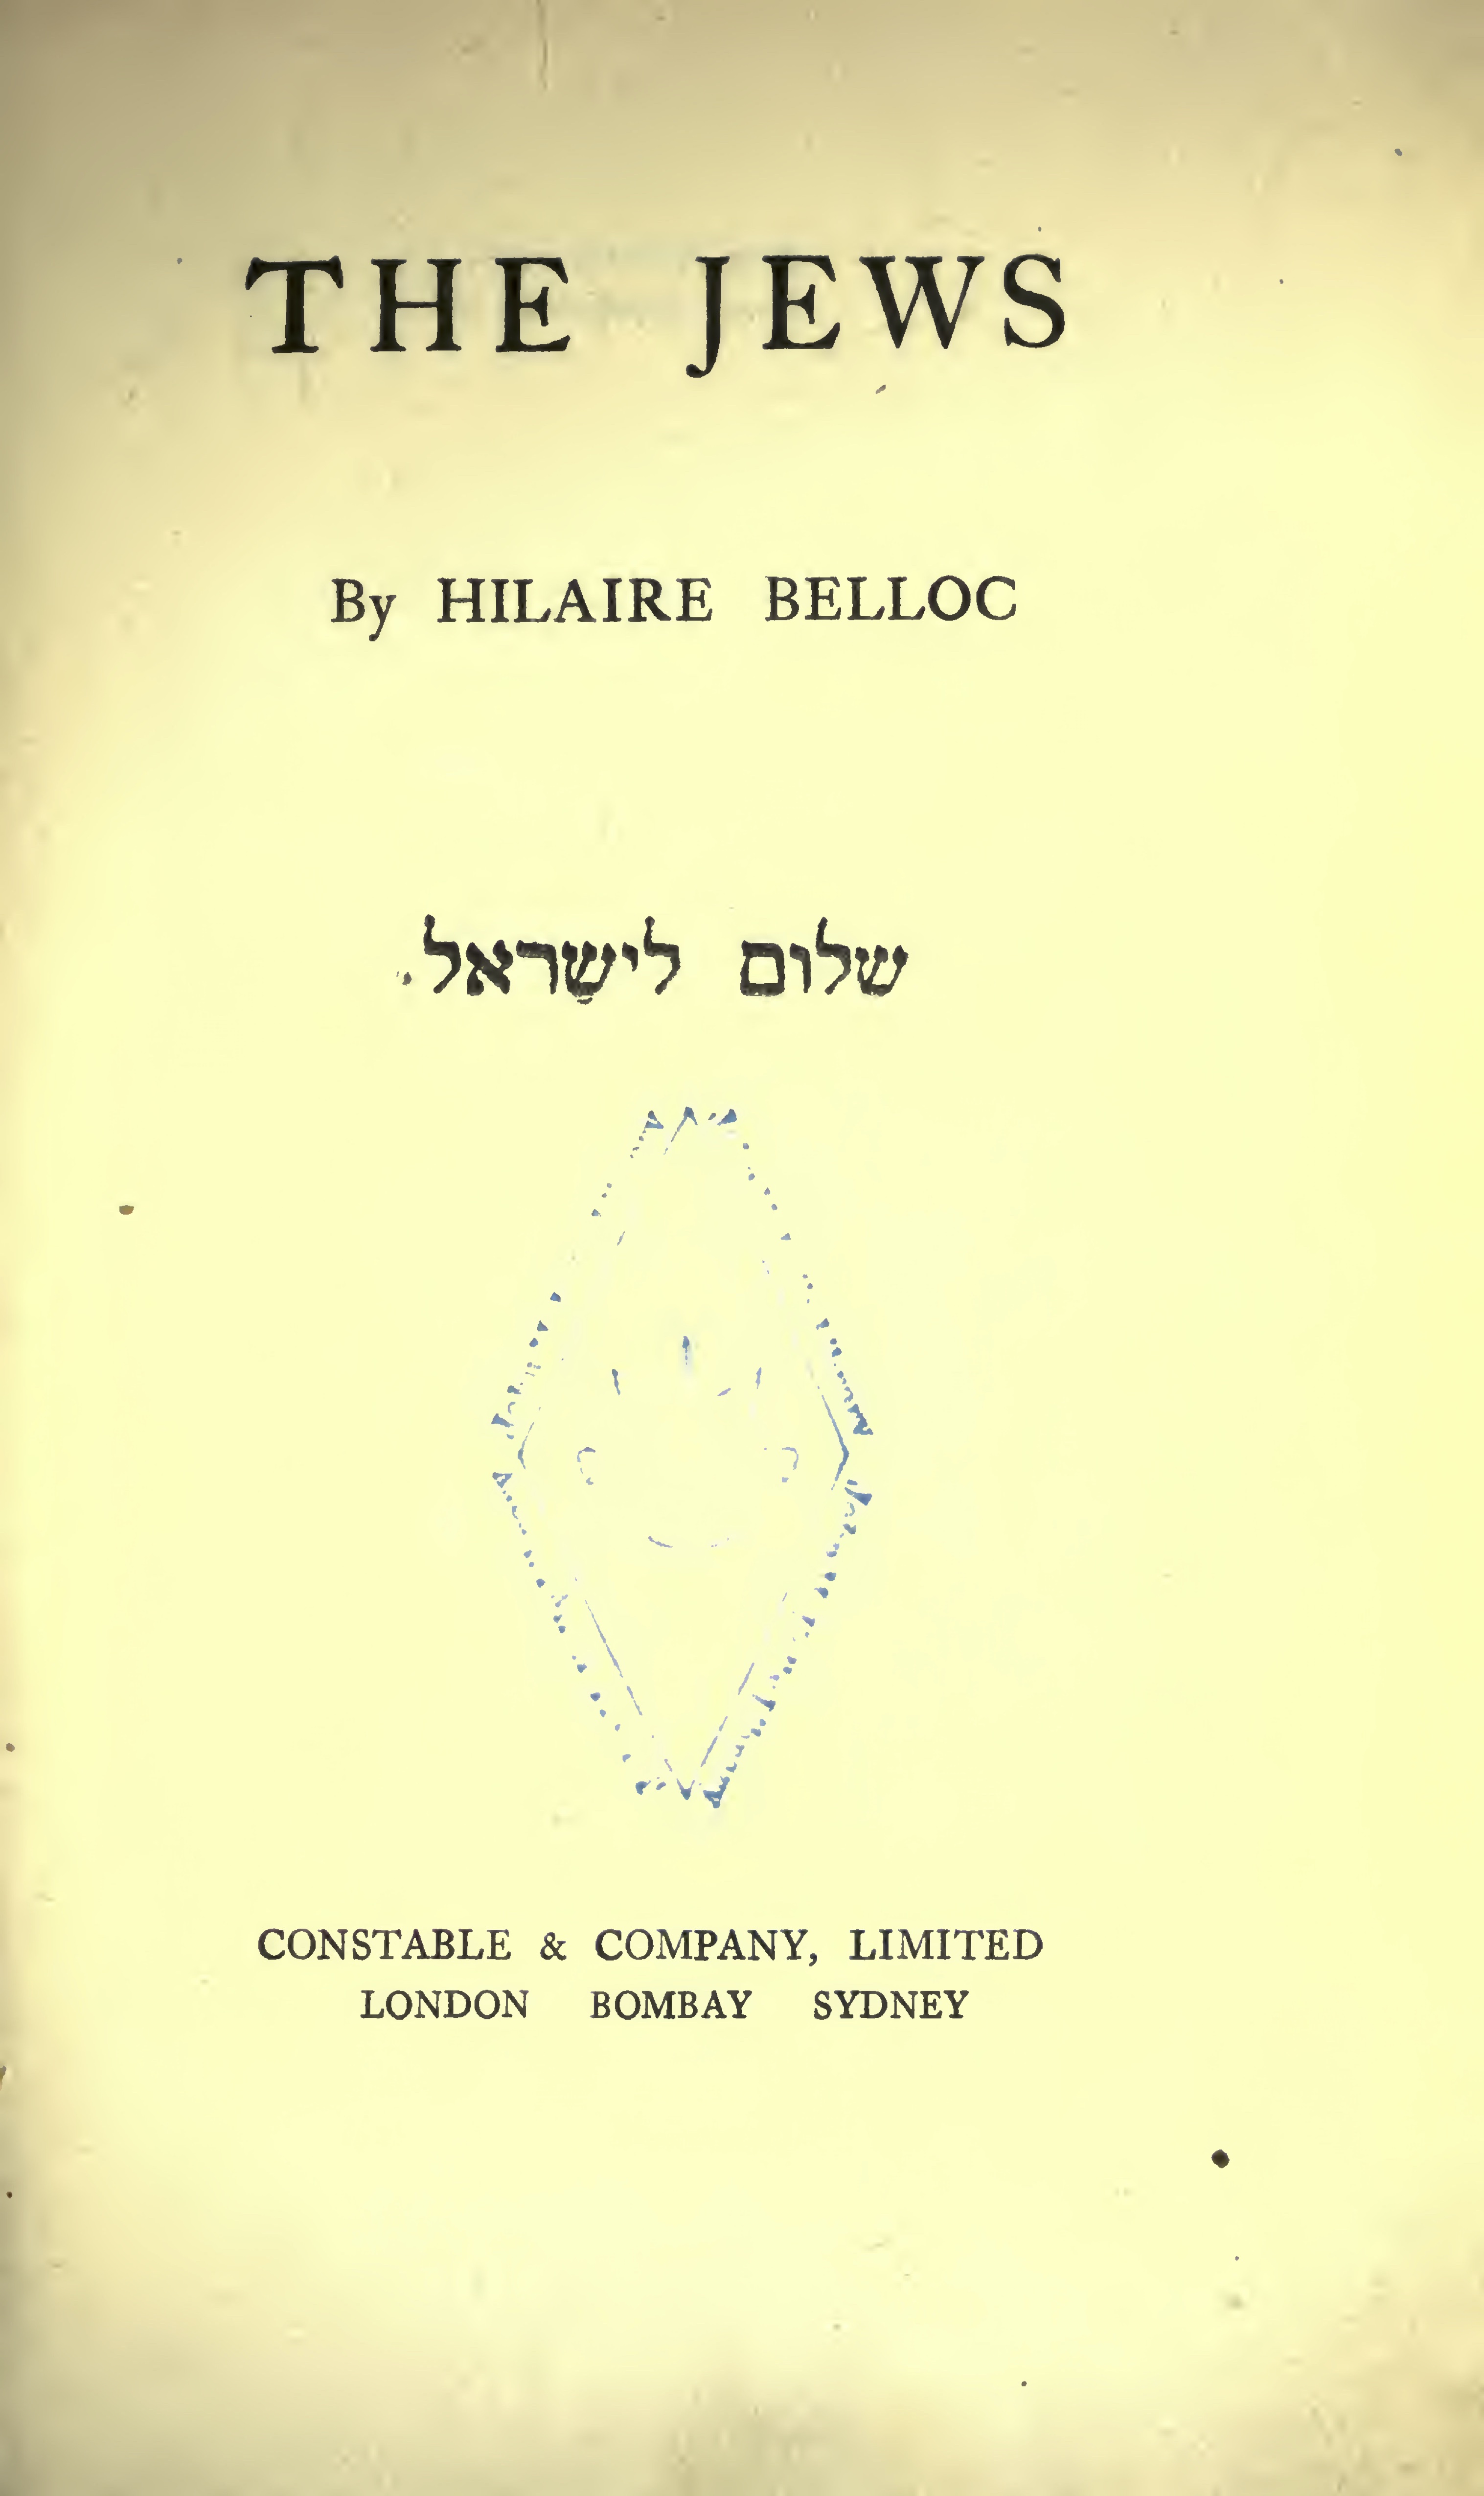 The Jews - Hilaire Belloc.jpg